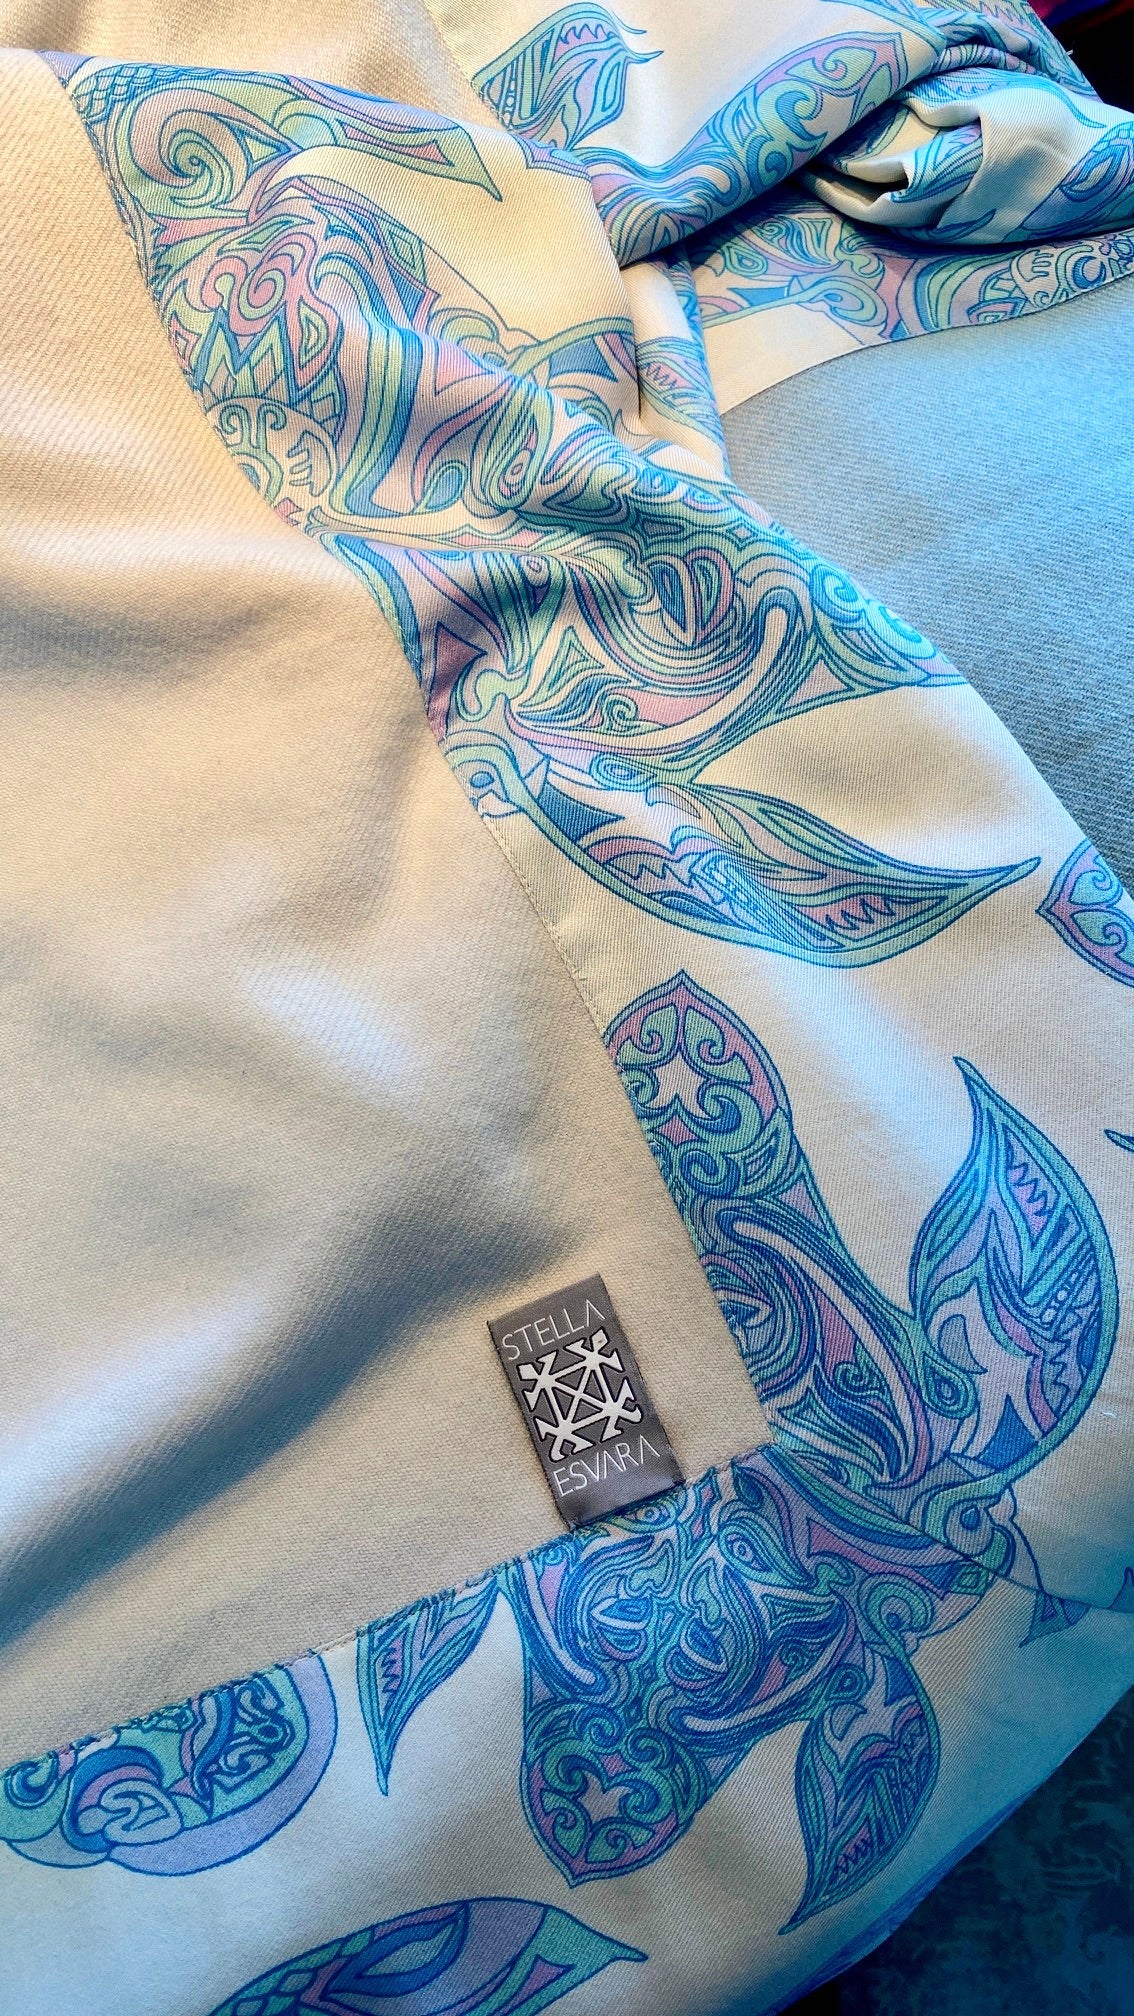 Plaid EVSARA TURTLES on silk - finest 100% twill weave cashmere - blanket with handmade silk border